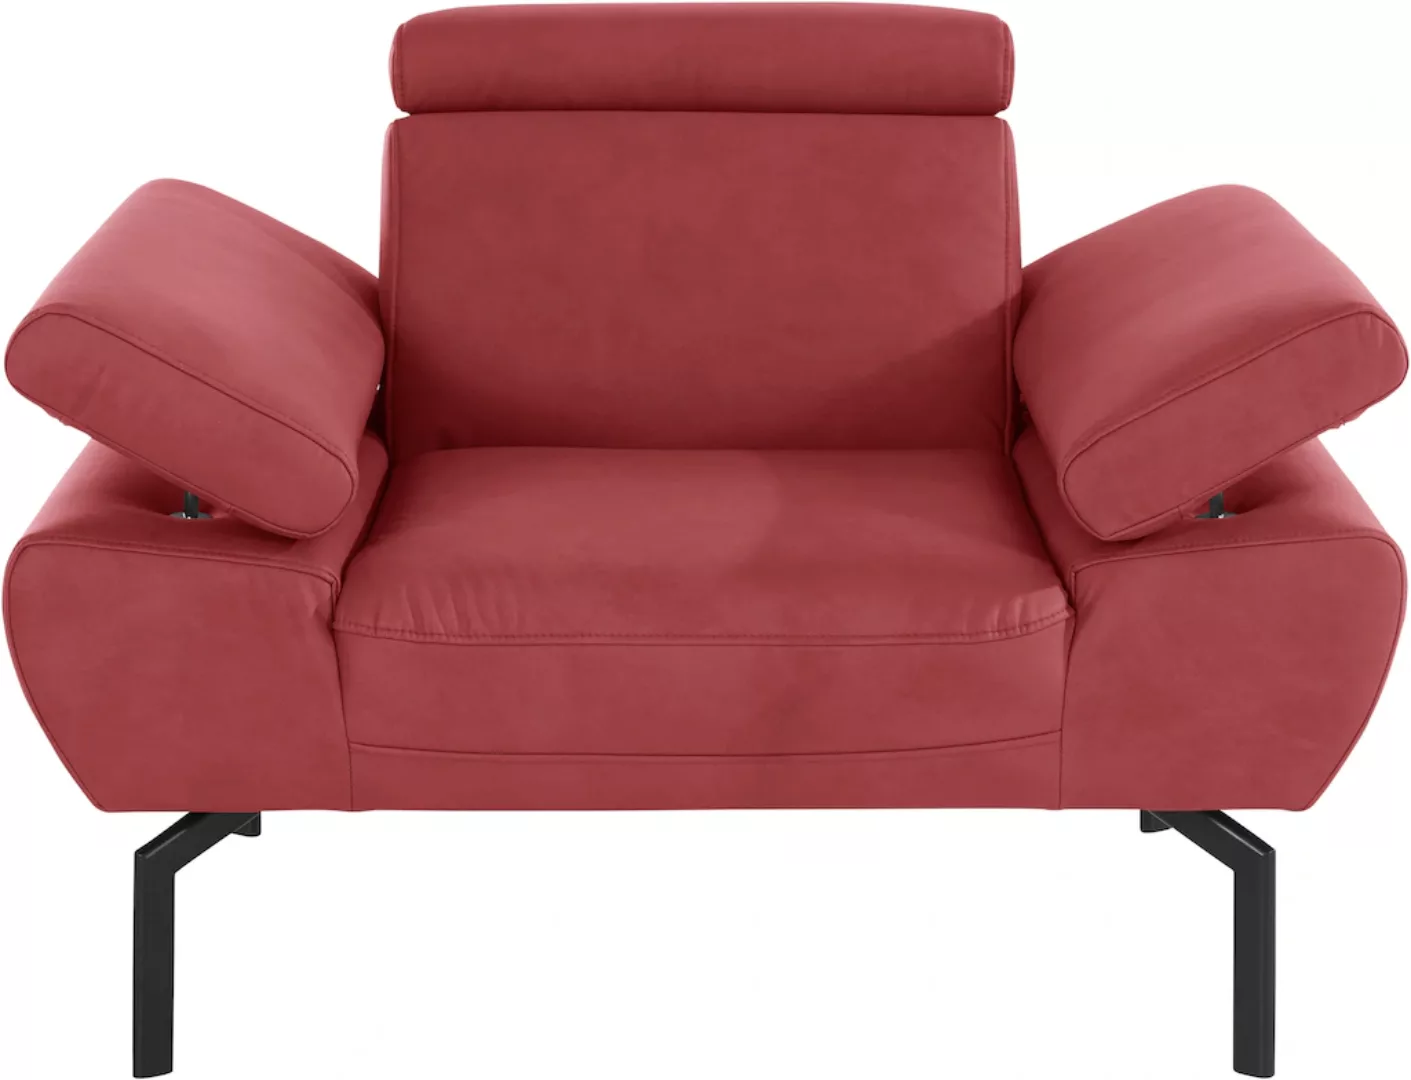 Places of Style Sessel "Trapino Luxus" günstig online kaufen